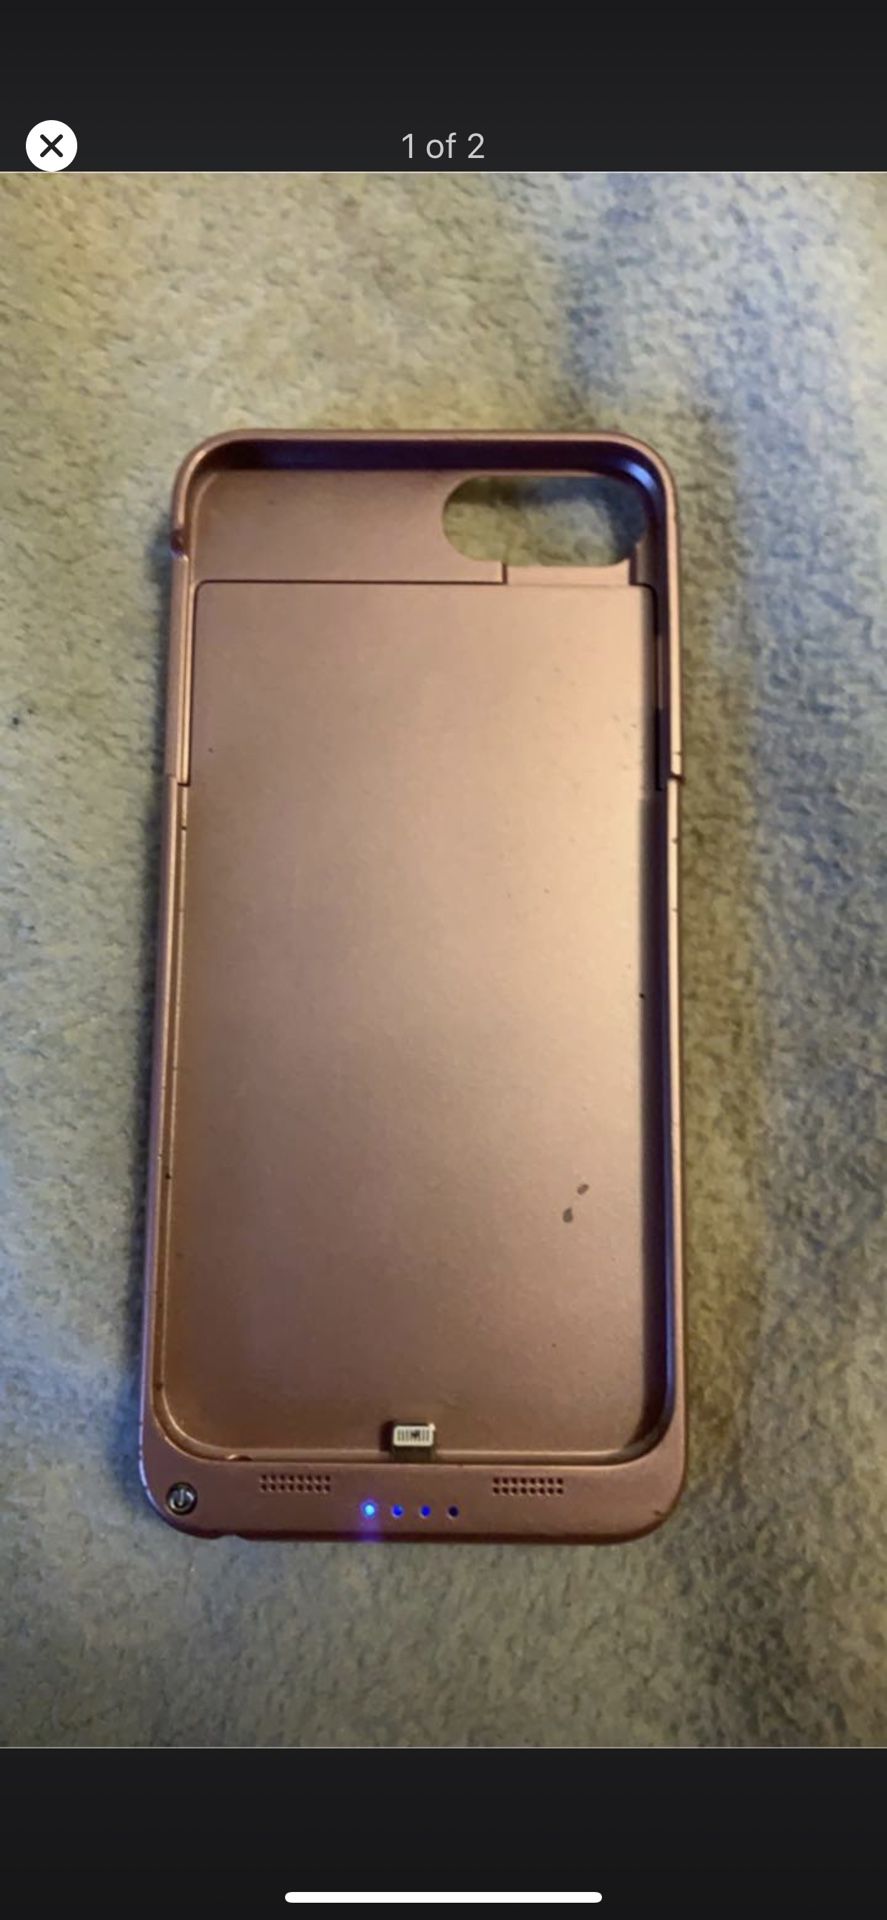 iphone charging case